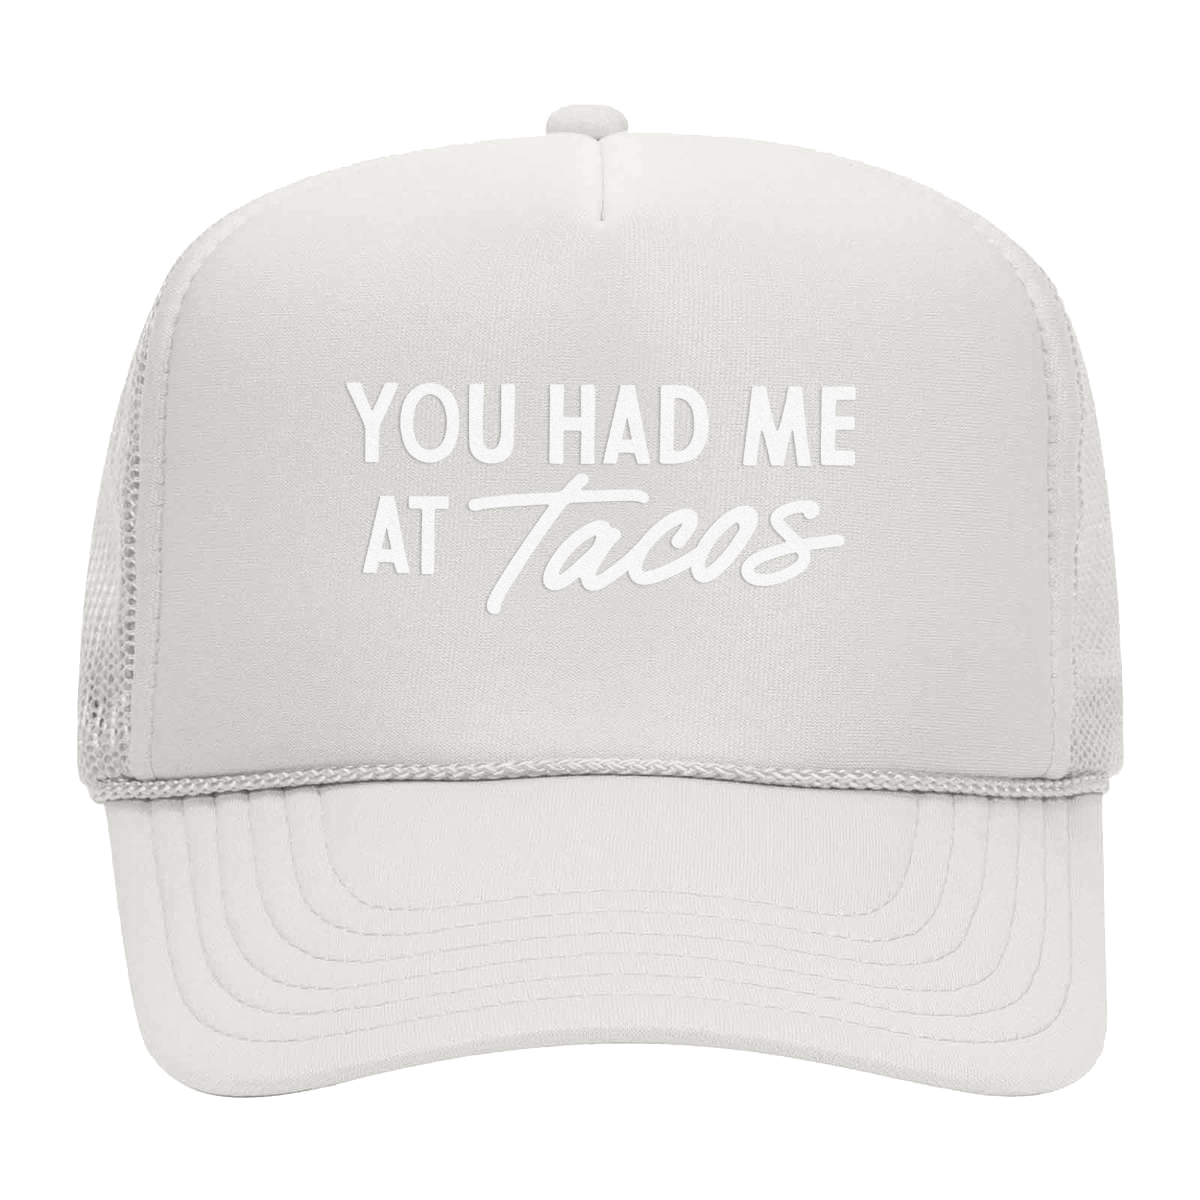 You Had Me at Tacos Foam Snapback